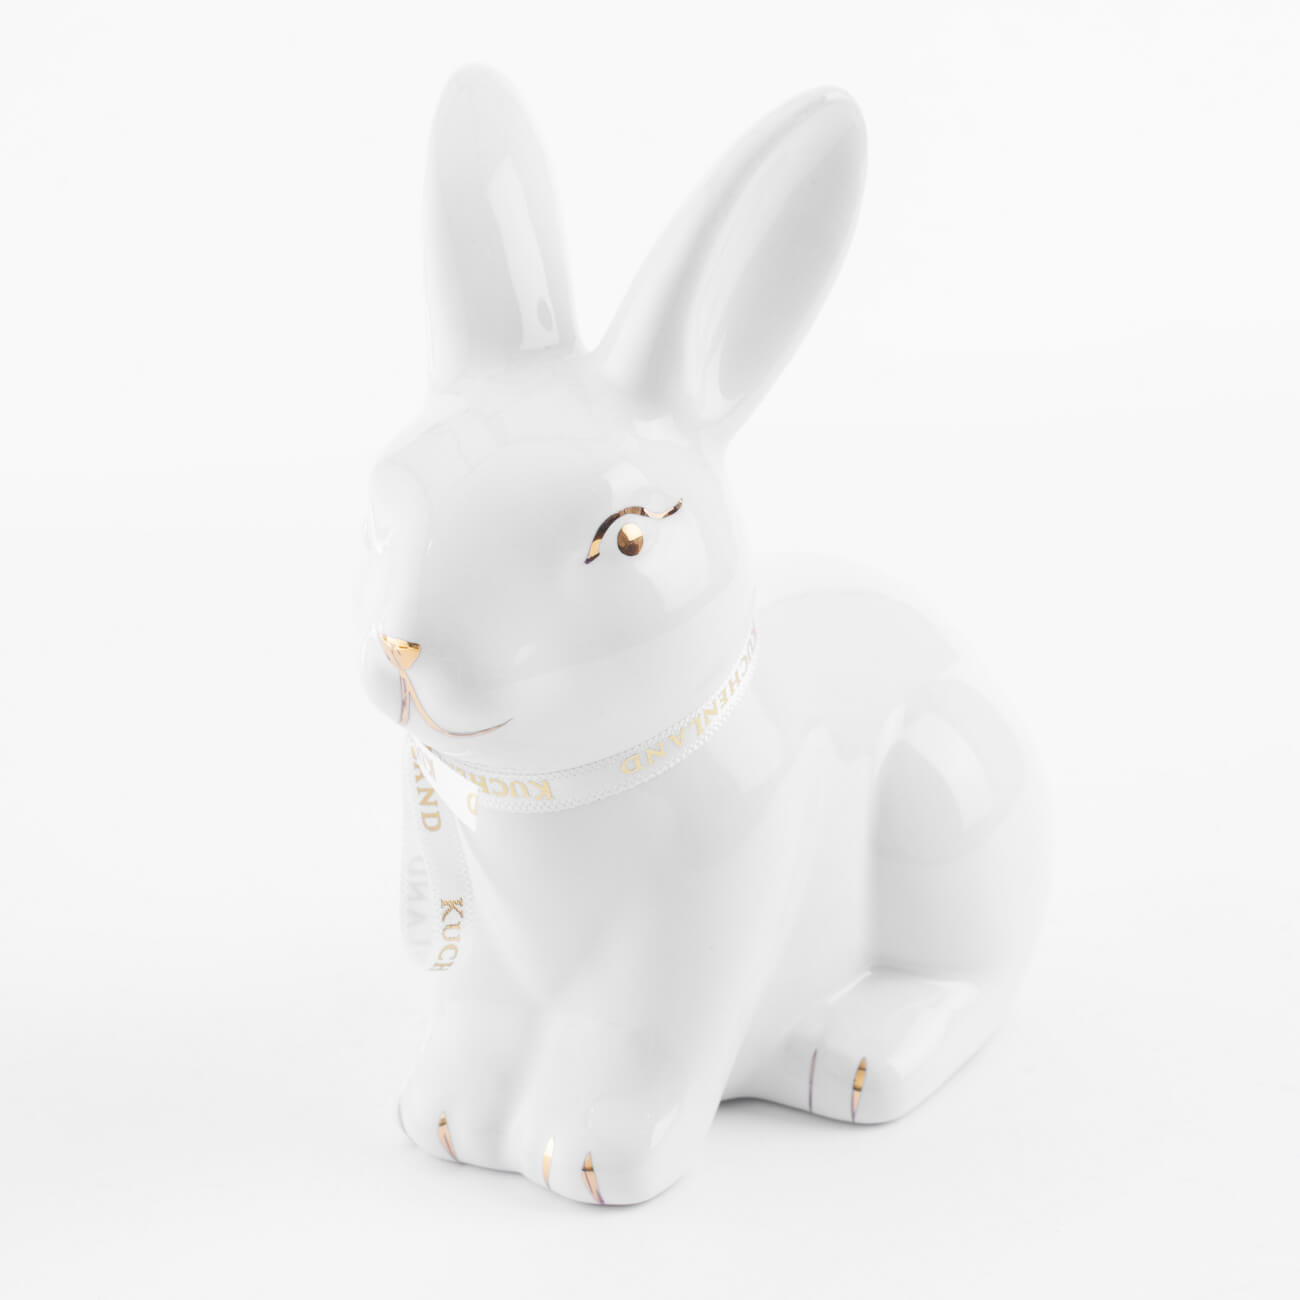 статуэтка 18 см керамика молочная кролик сидит easter blooming Статуэтка, 13 см, керамика, бело-золотистая, Кролик сидит, Easter gold